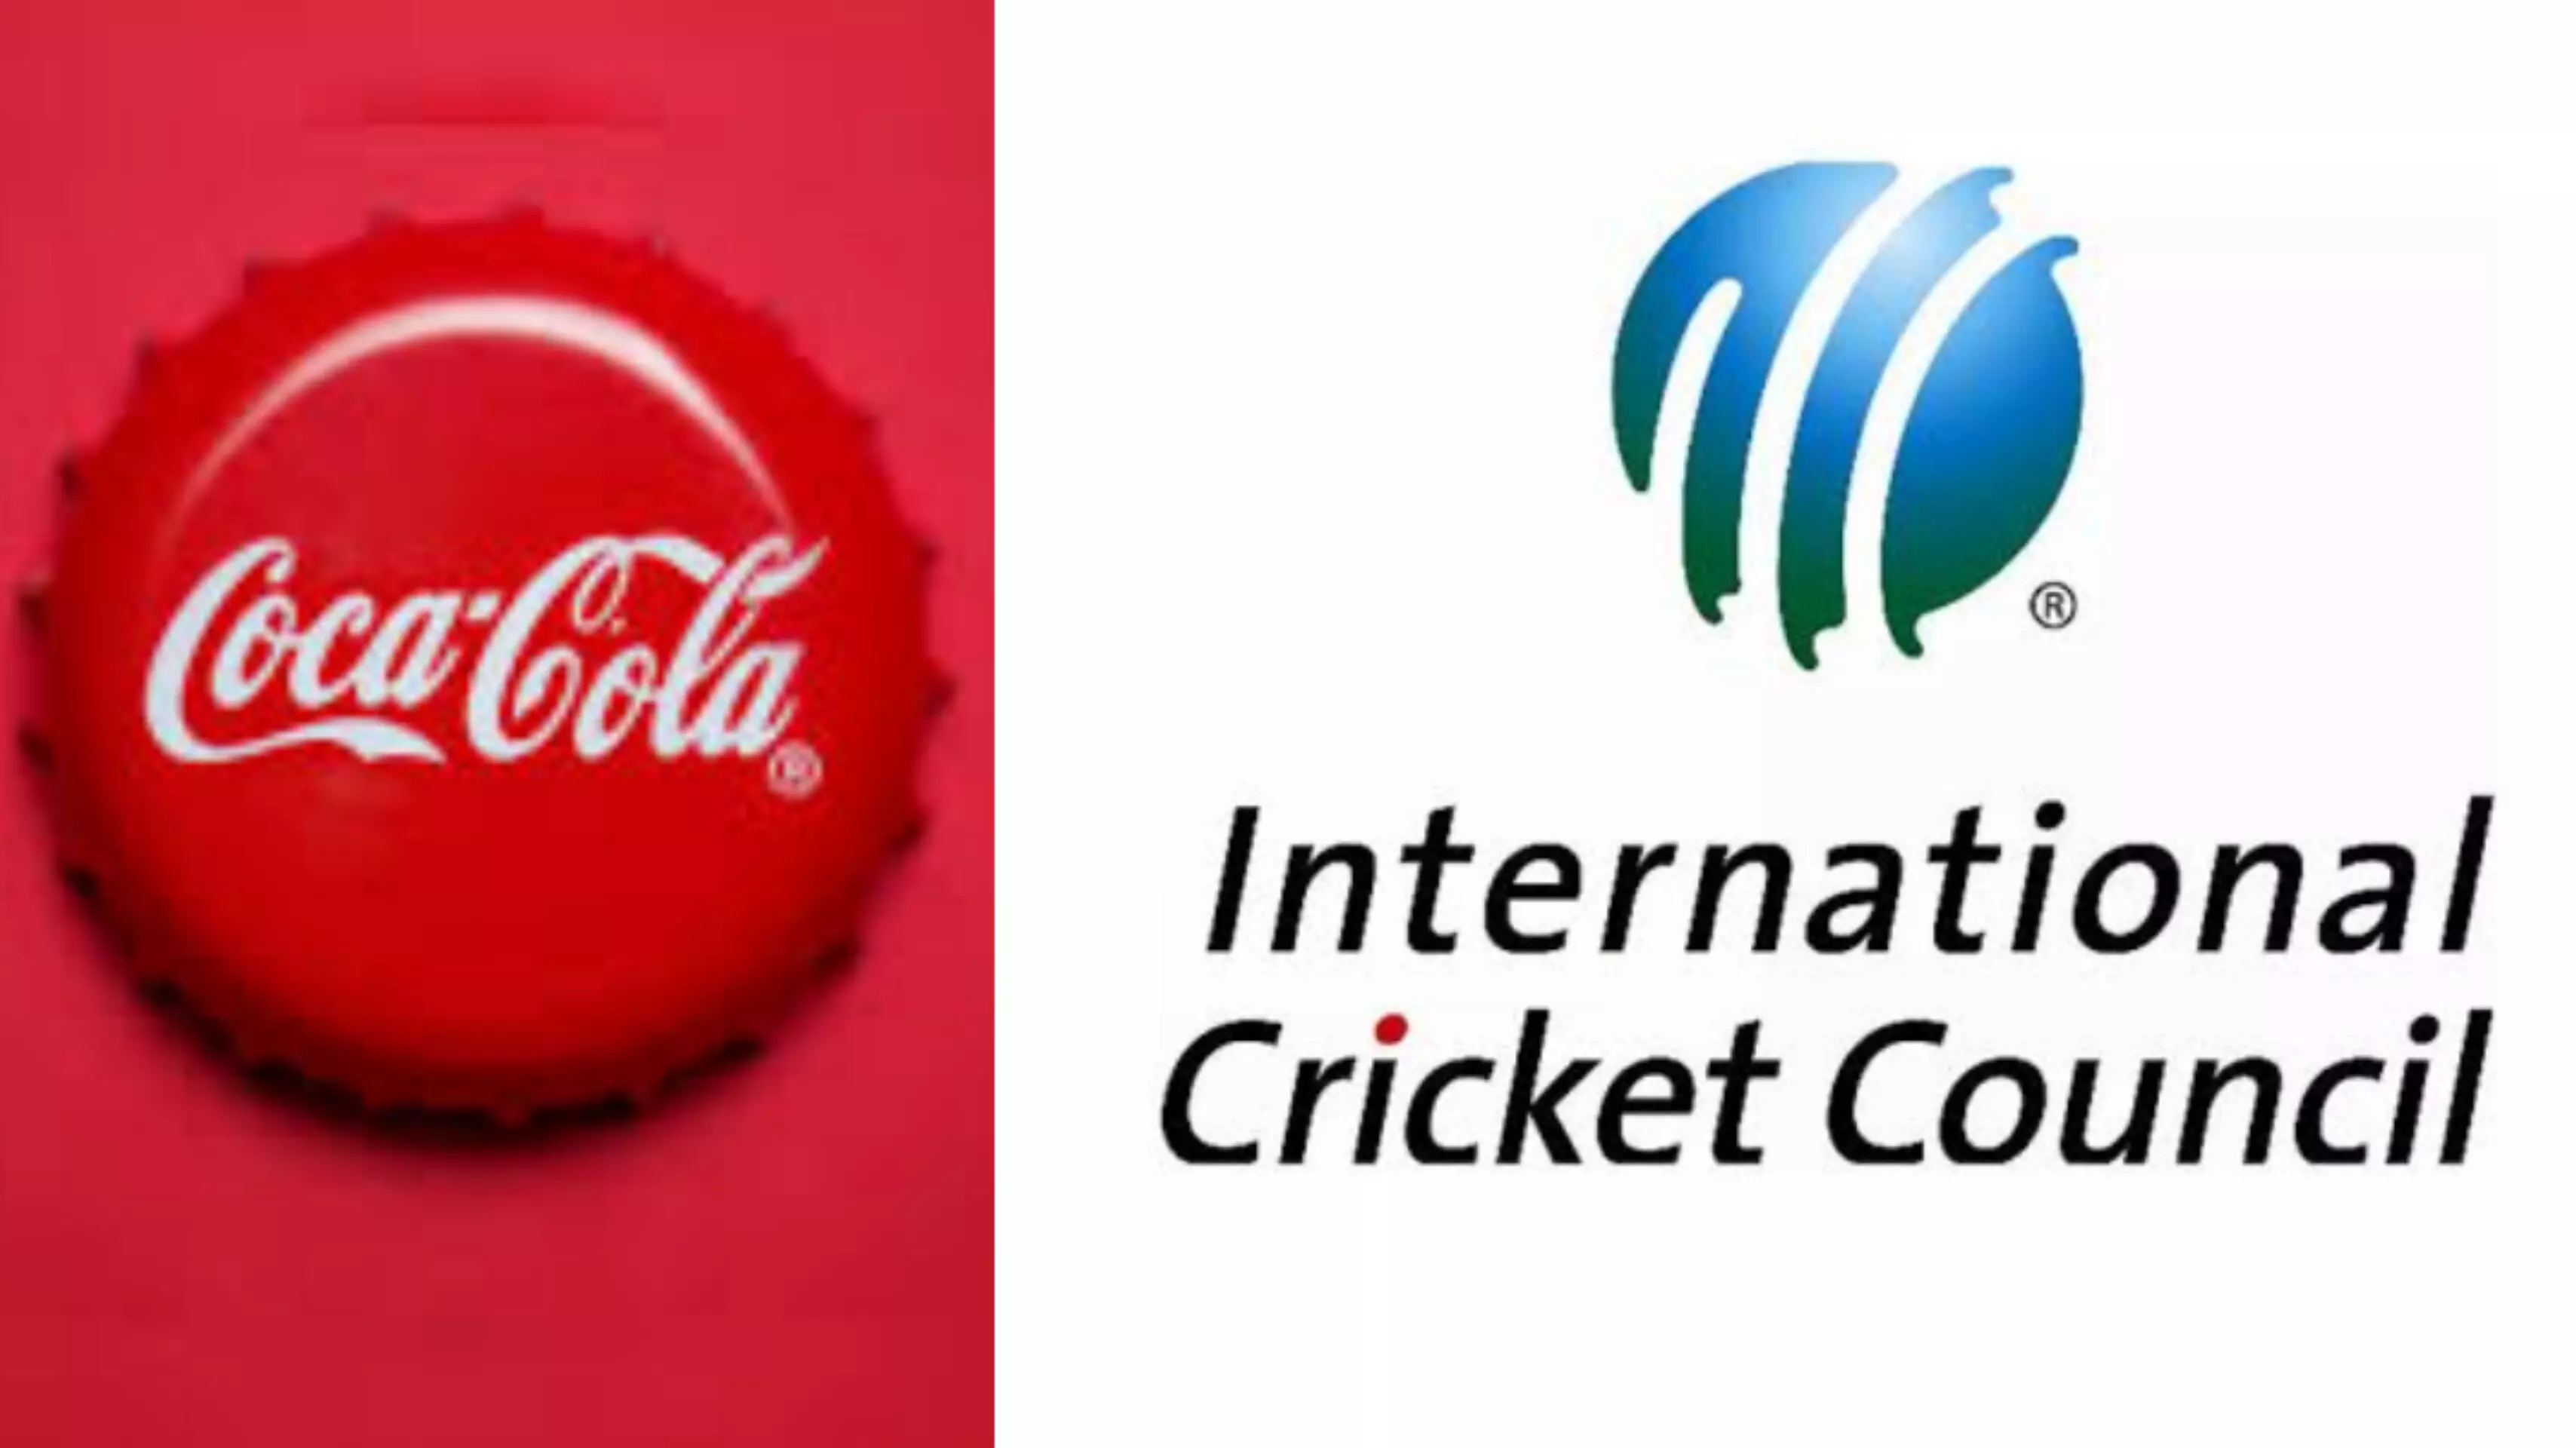 ICC and Coca Cola Partnership